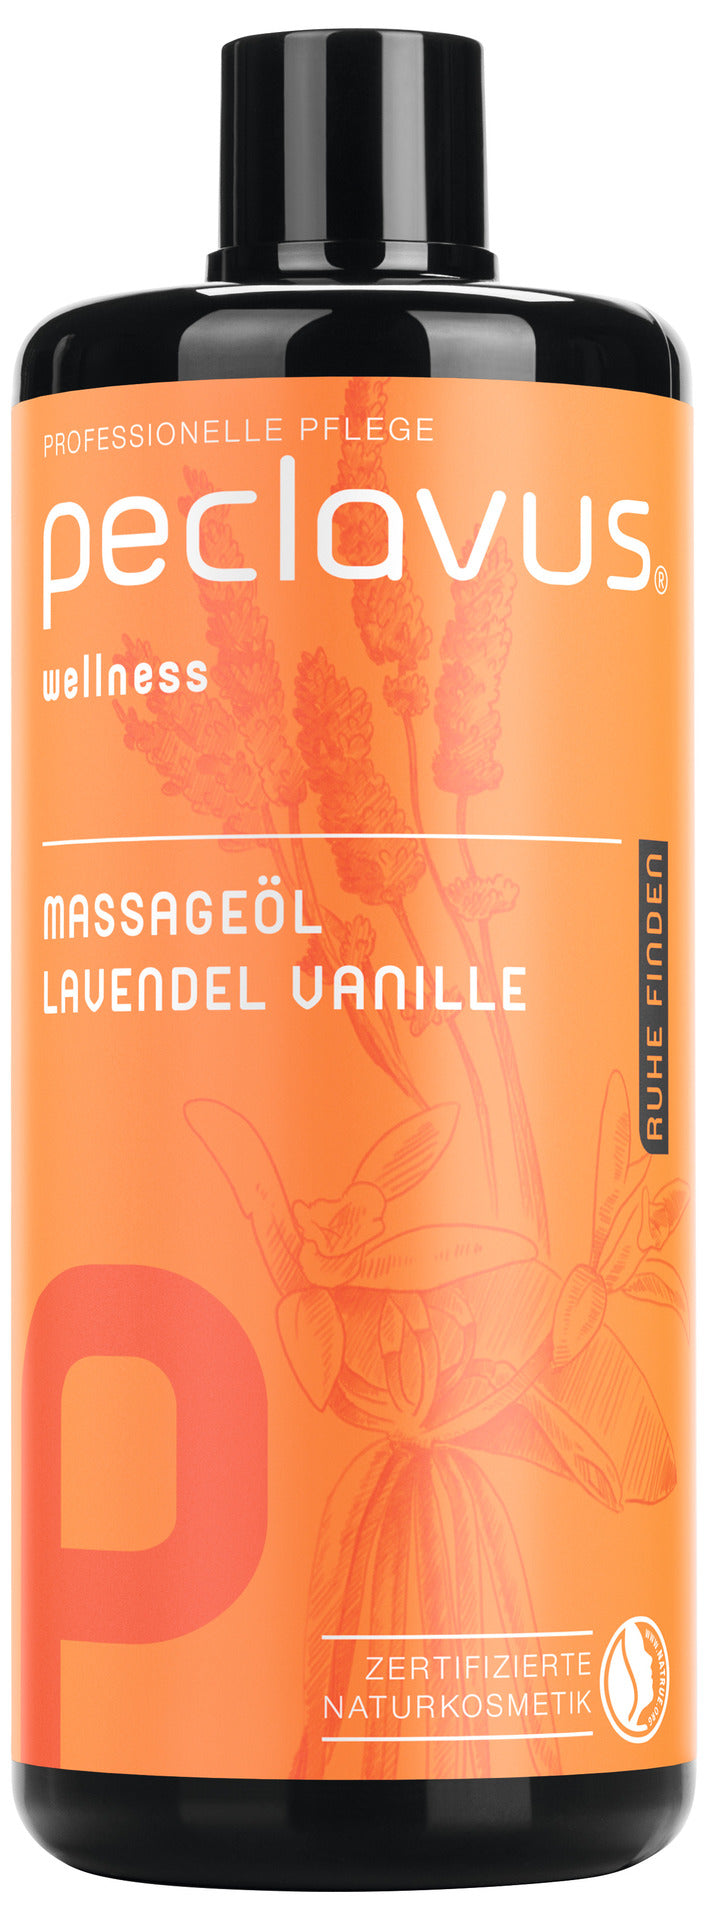 Huile de massage - Lavande Vanille - 500 ml - Peclavus